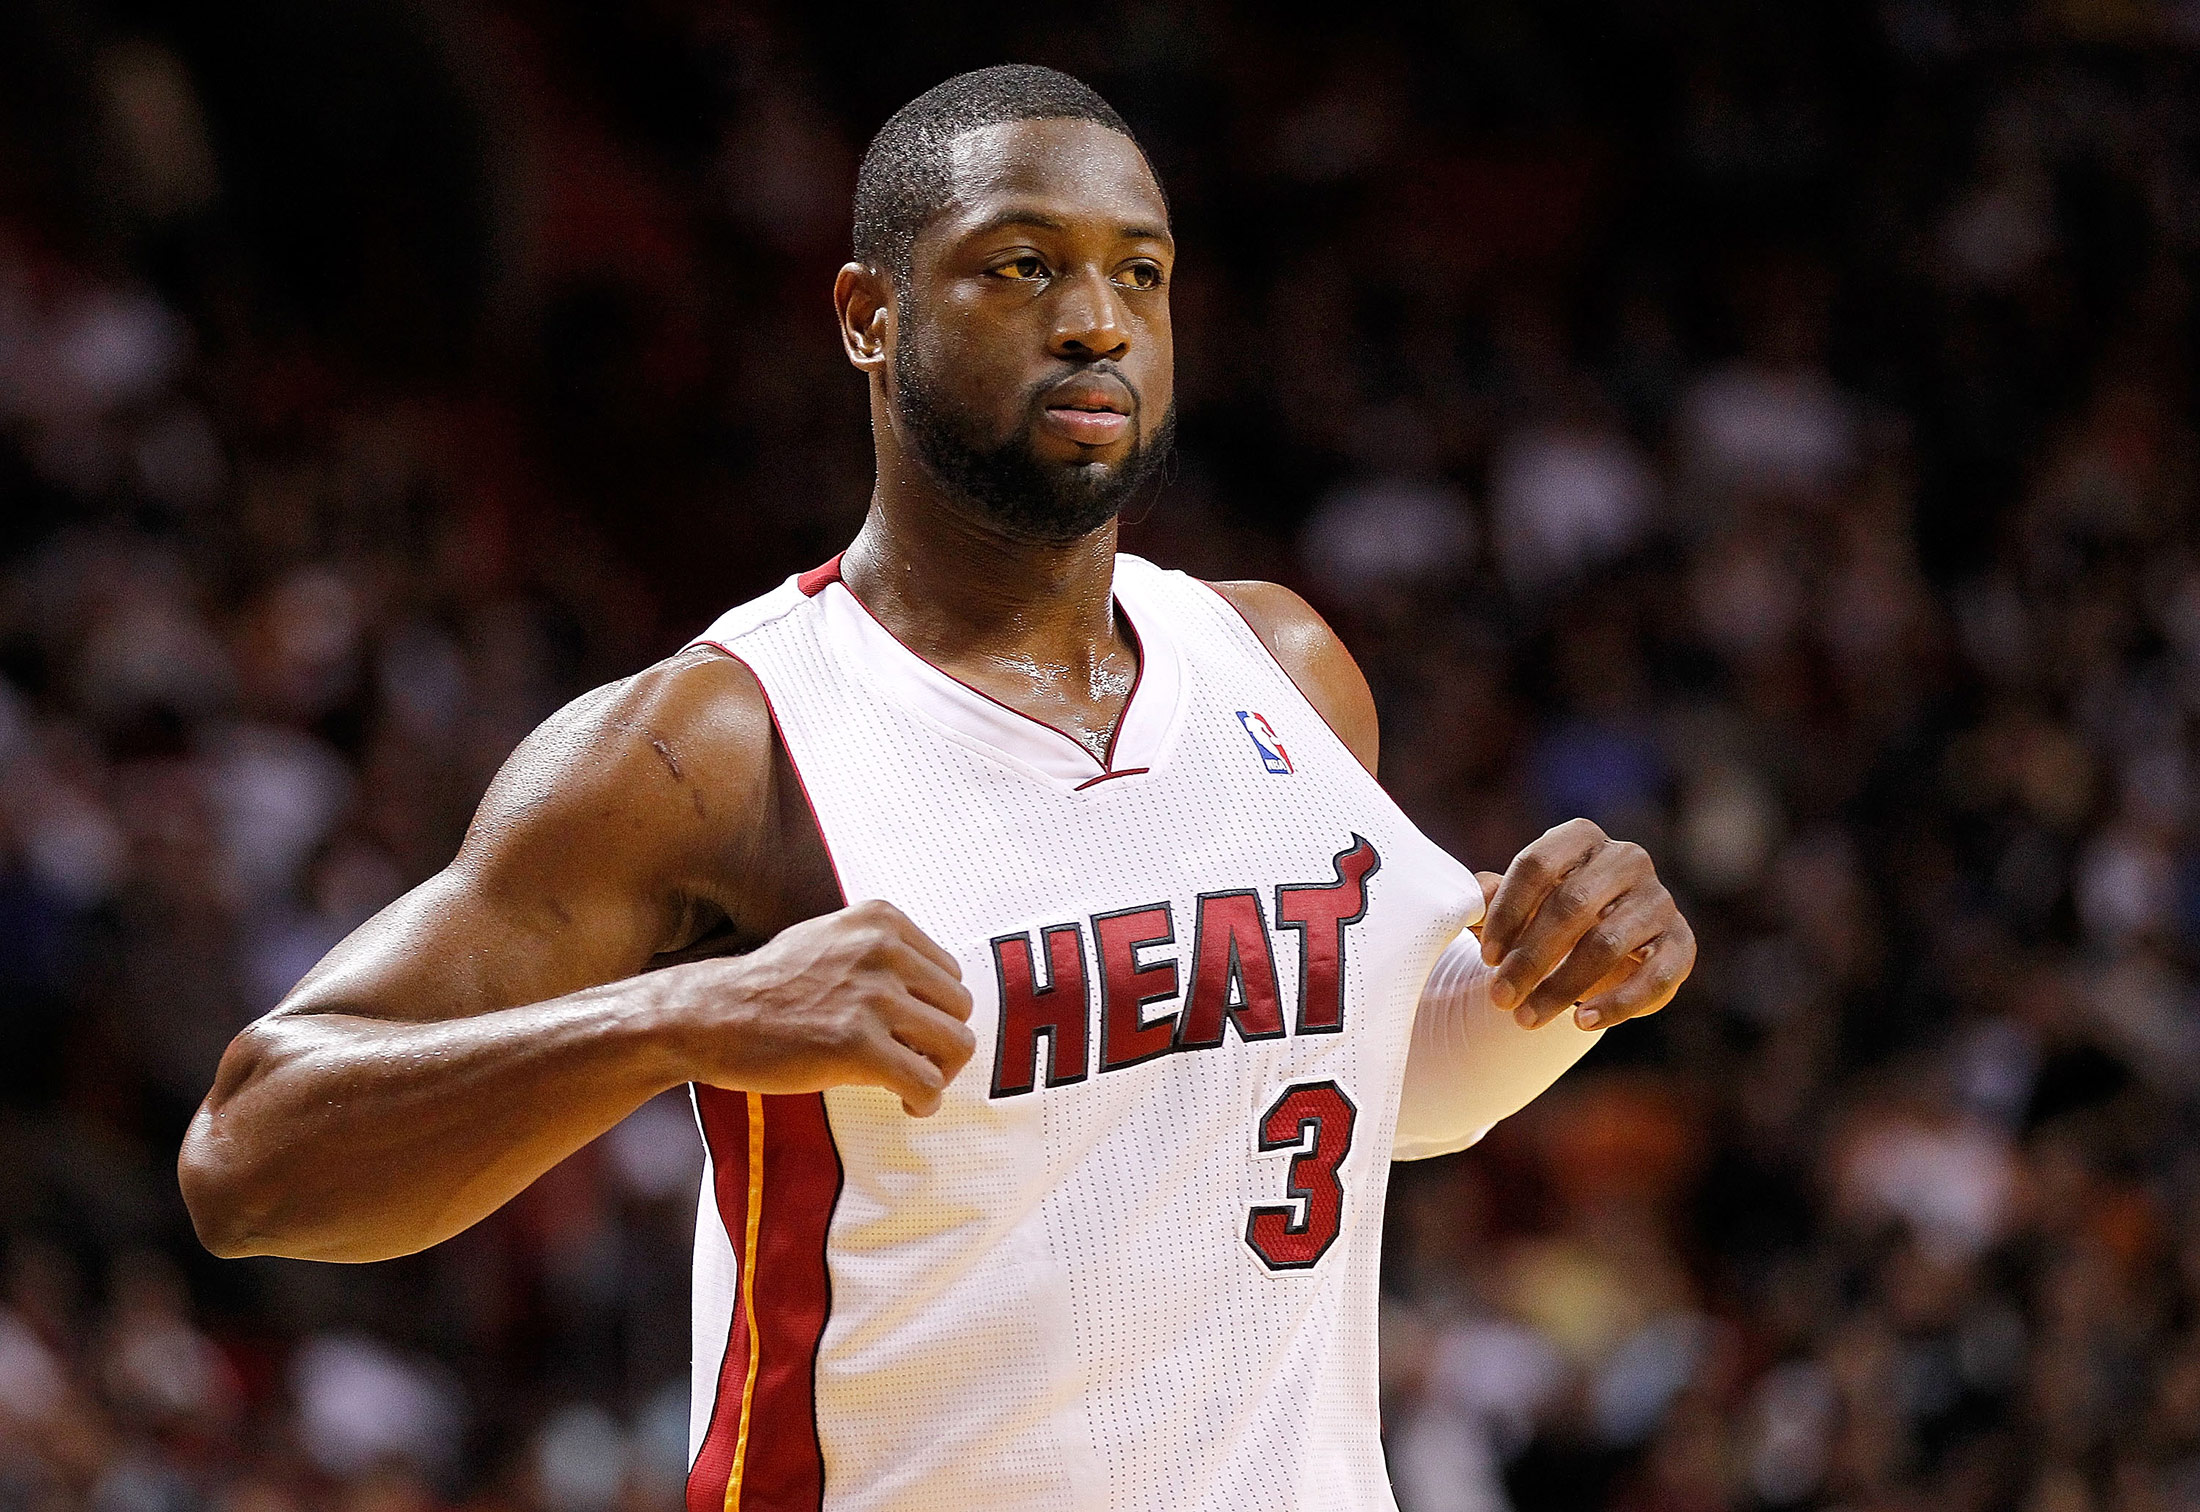 LeBron James' Game 7 Miami Heat Jersey Sells for $3.7 Million